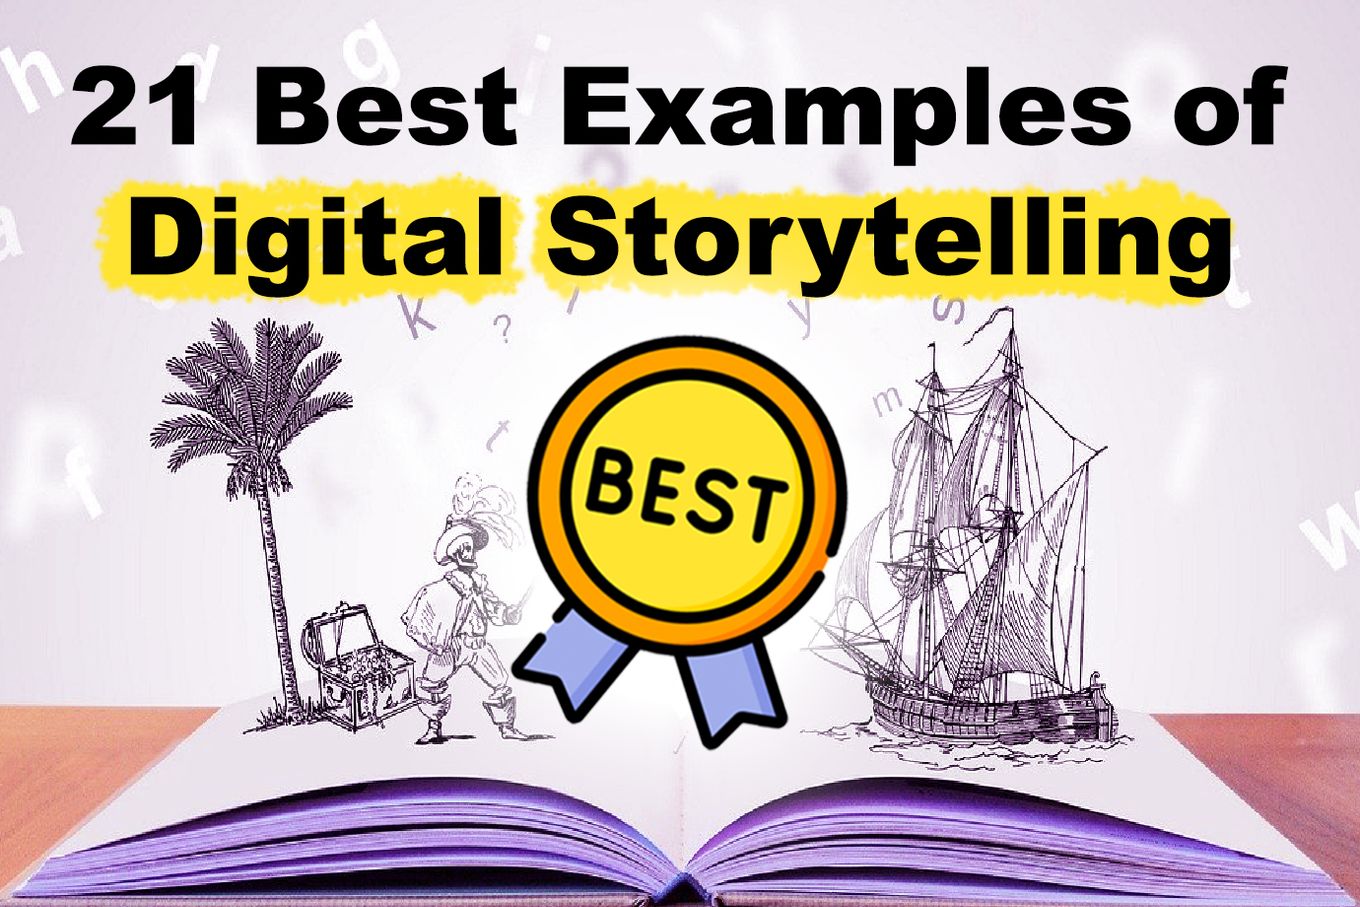 List of Examples Of Digital Storytelling